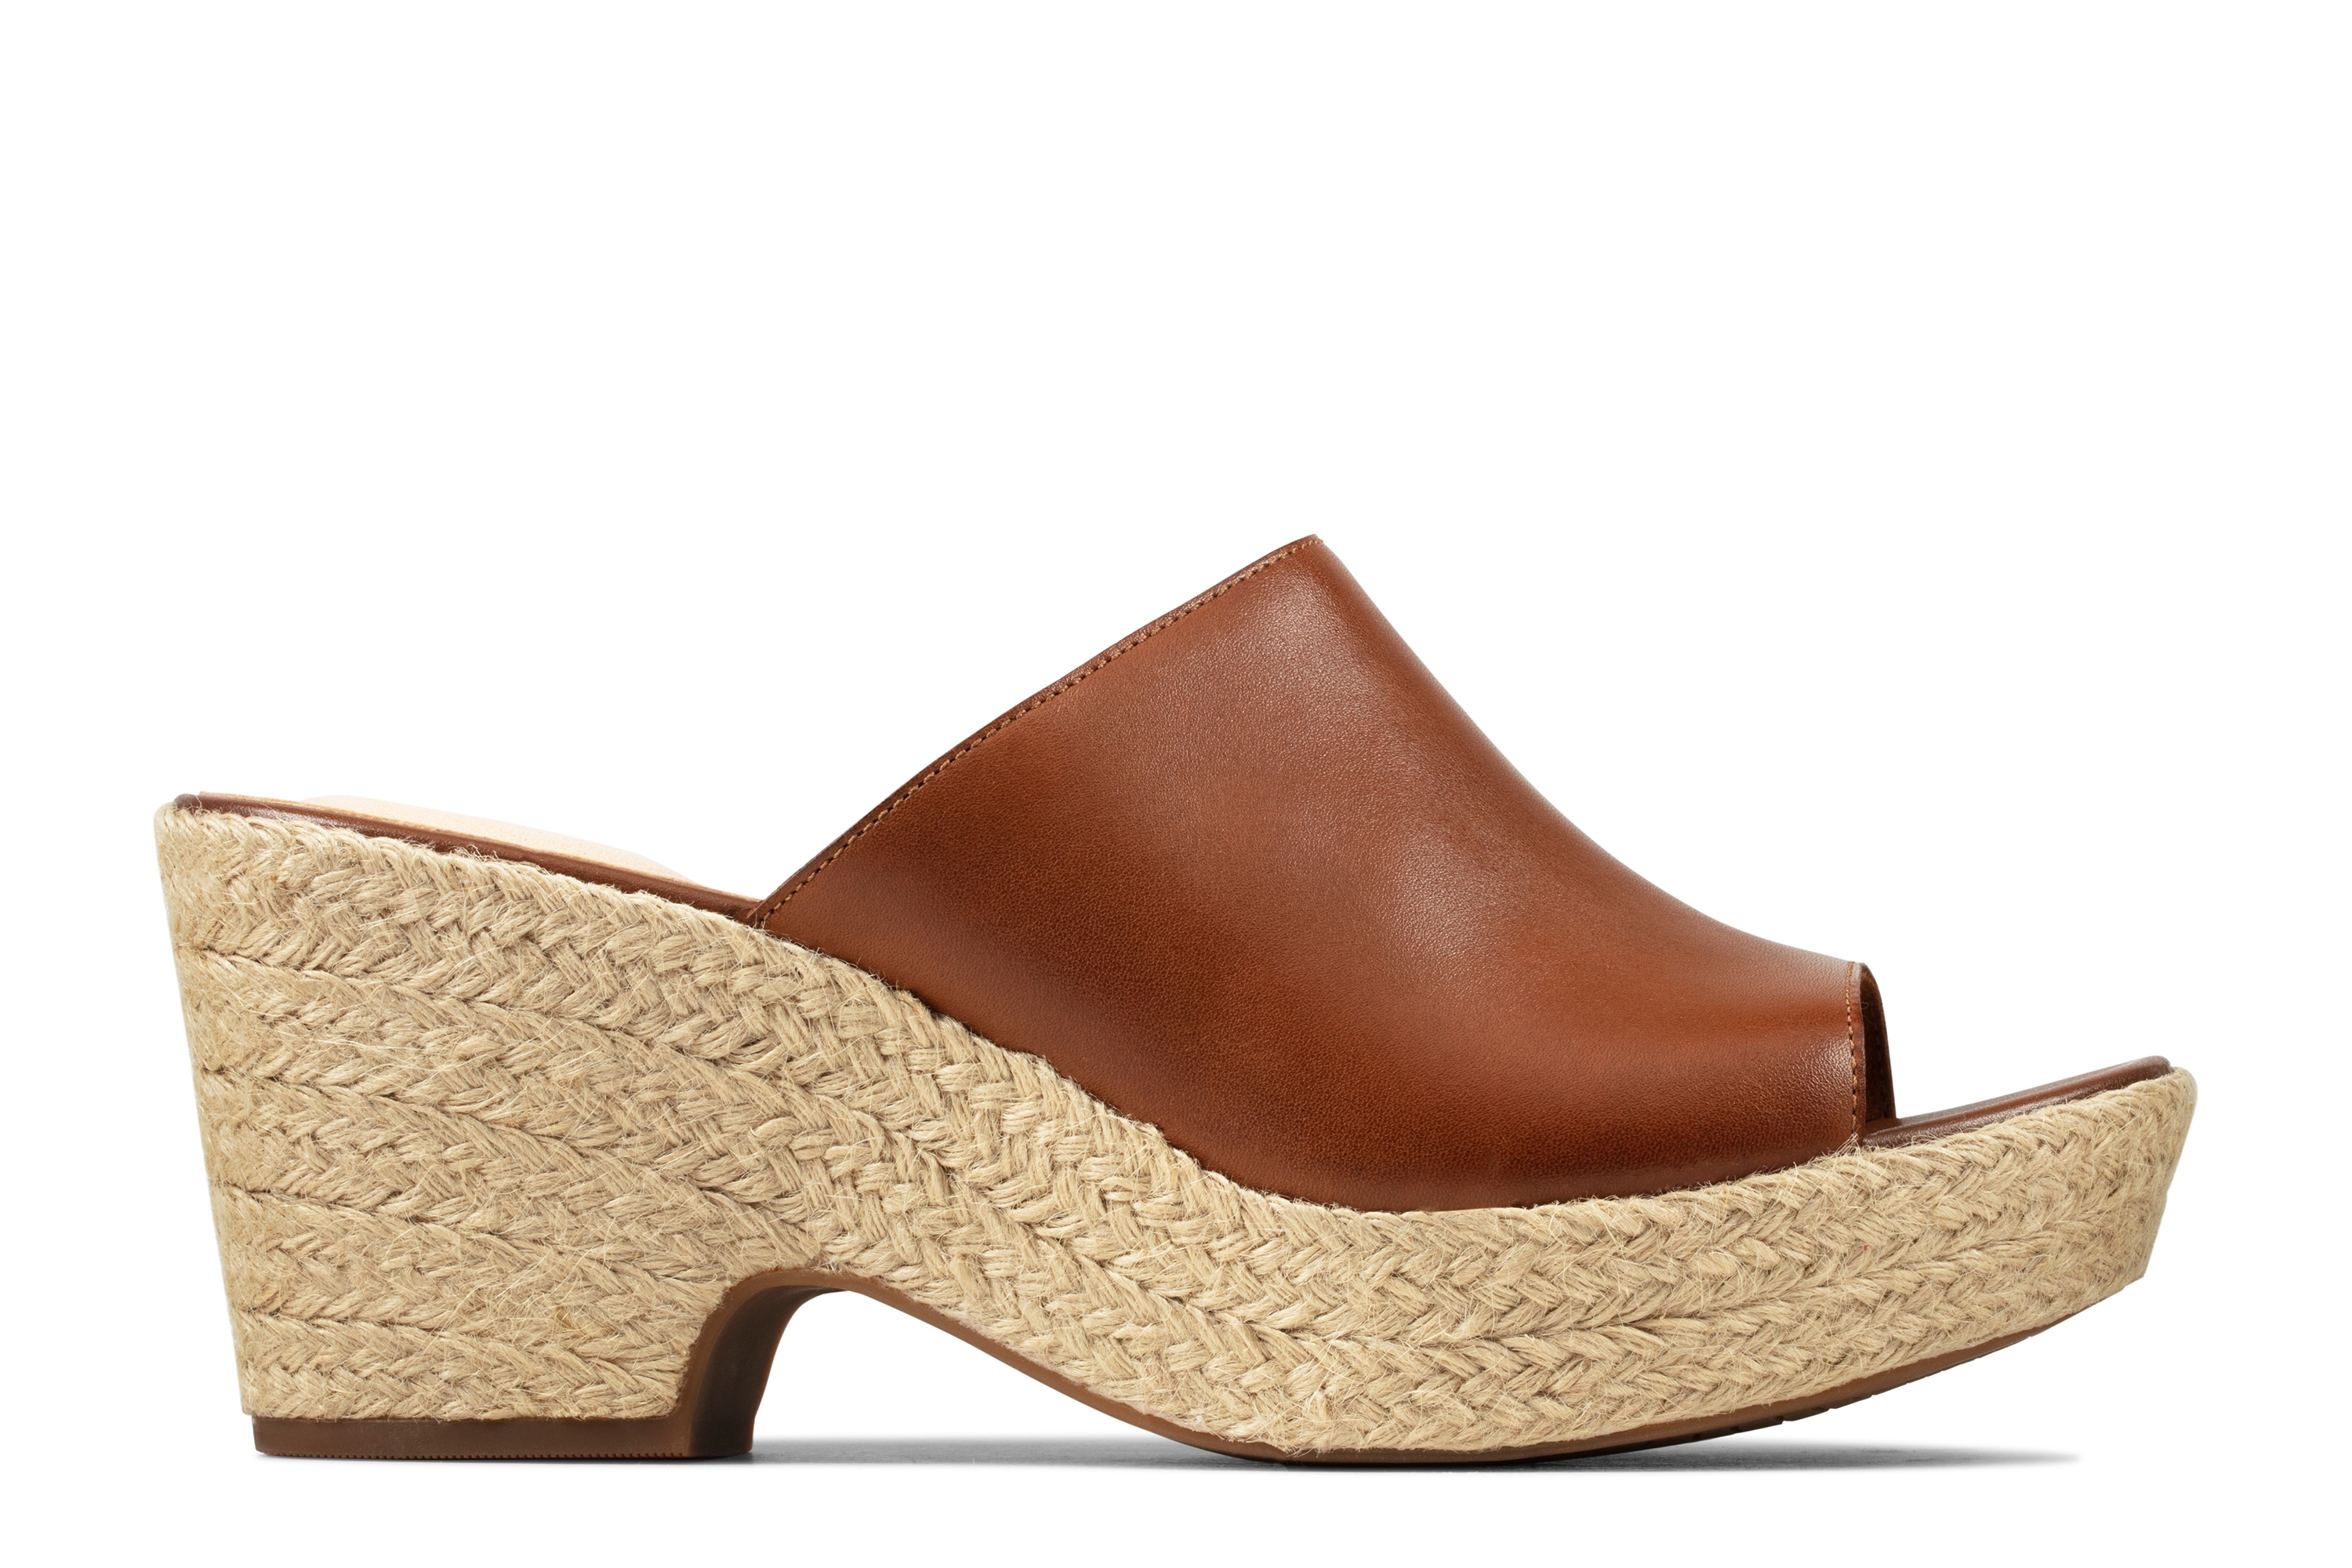 Clarks | Maritsa Mule Tan Leather Wedge Sandal